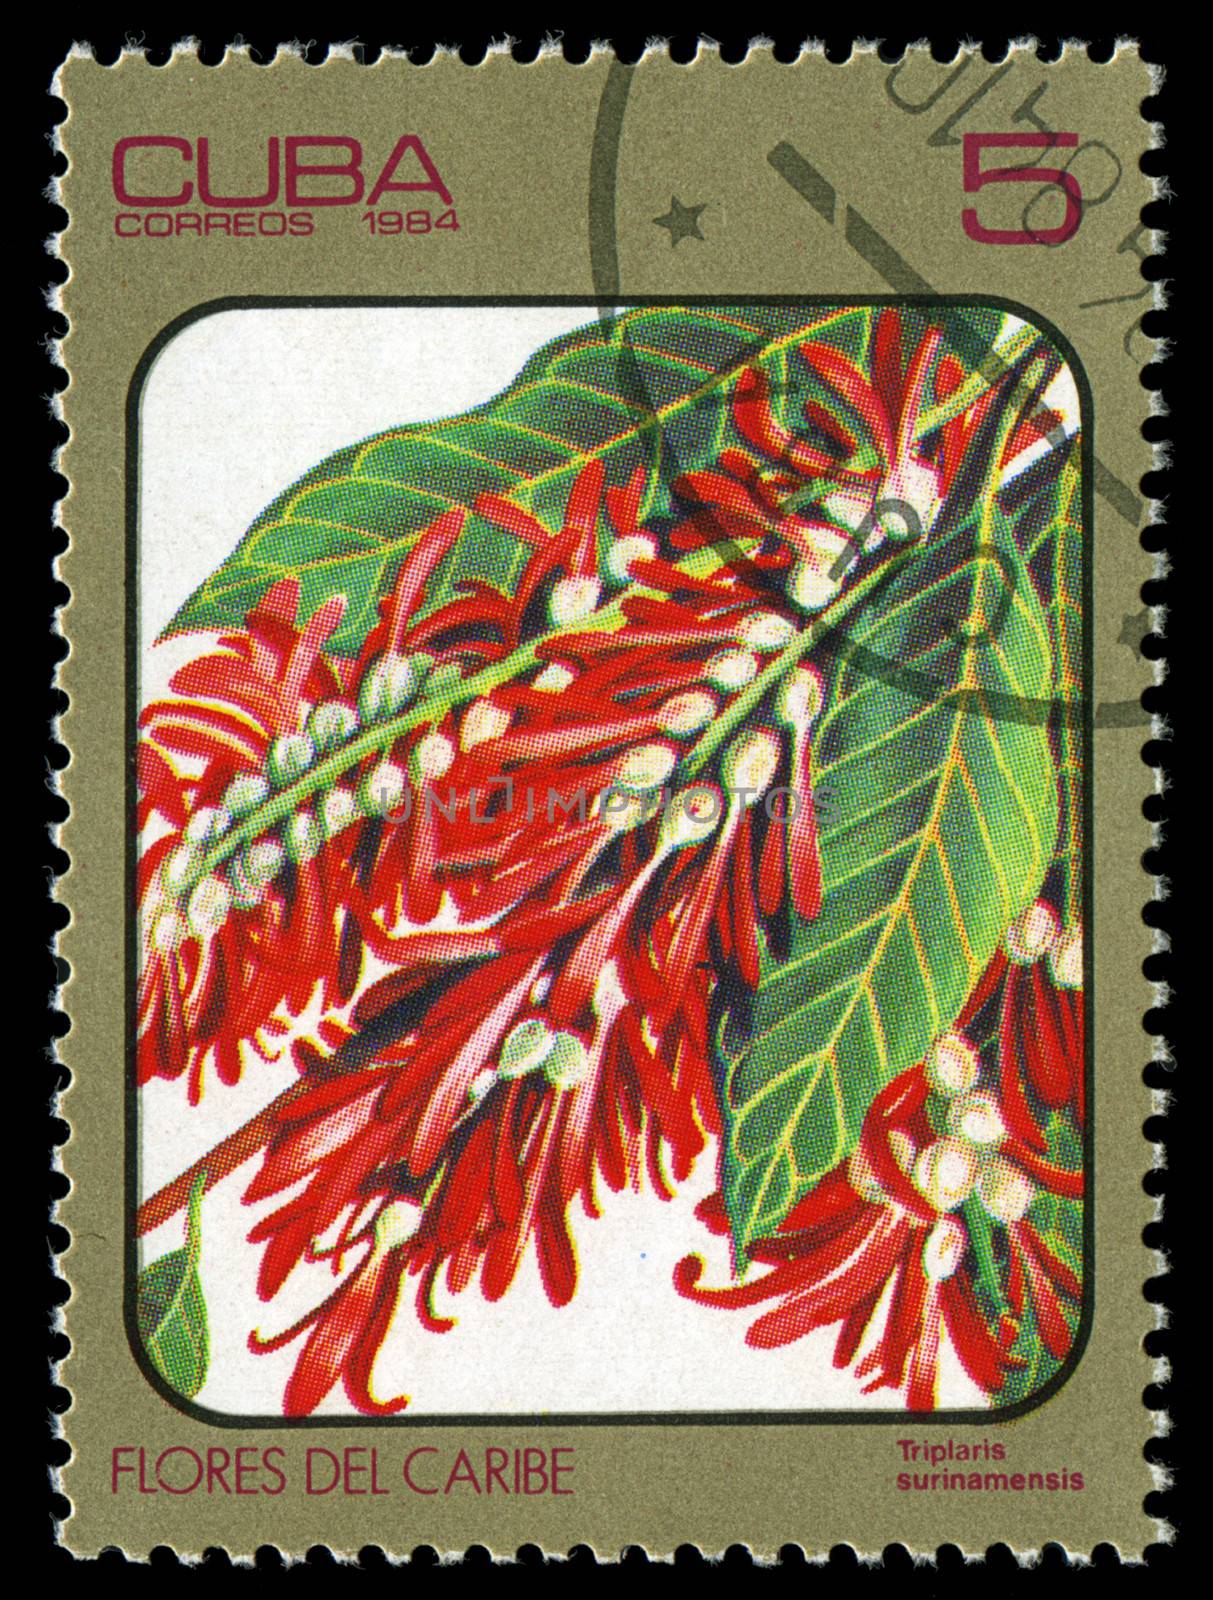 CUBA - CIRCA 1984: post stamp printed in Cuba shows image of triplaris surinamensis from Caribbean flowers series, Scott catalog 2689 A730 5c, circa 1984